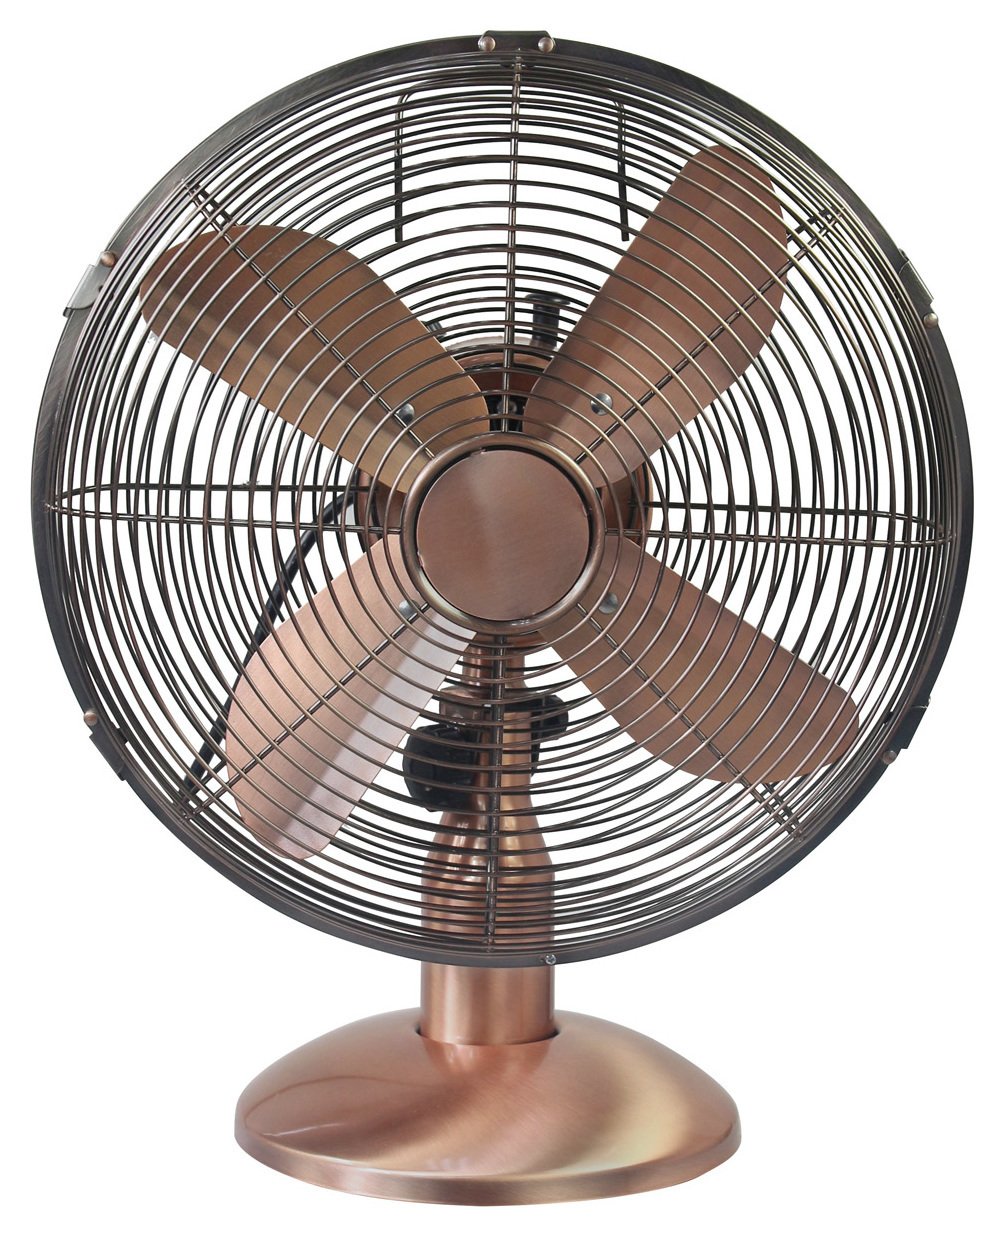 where can i buy a fan